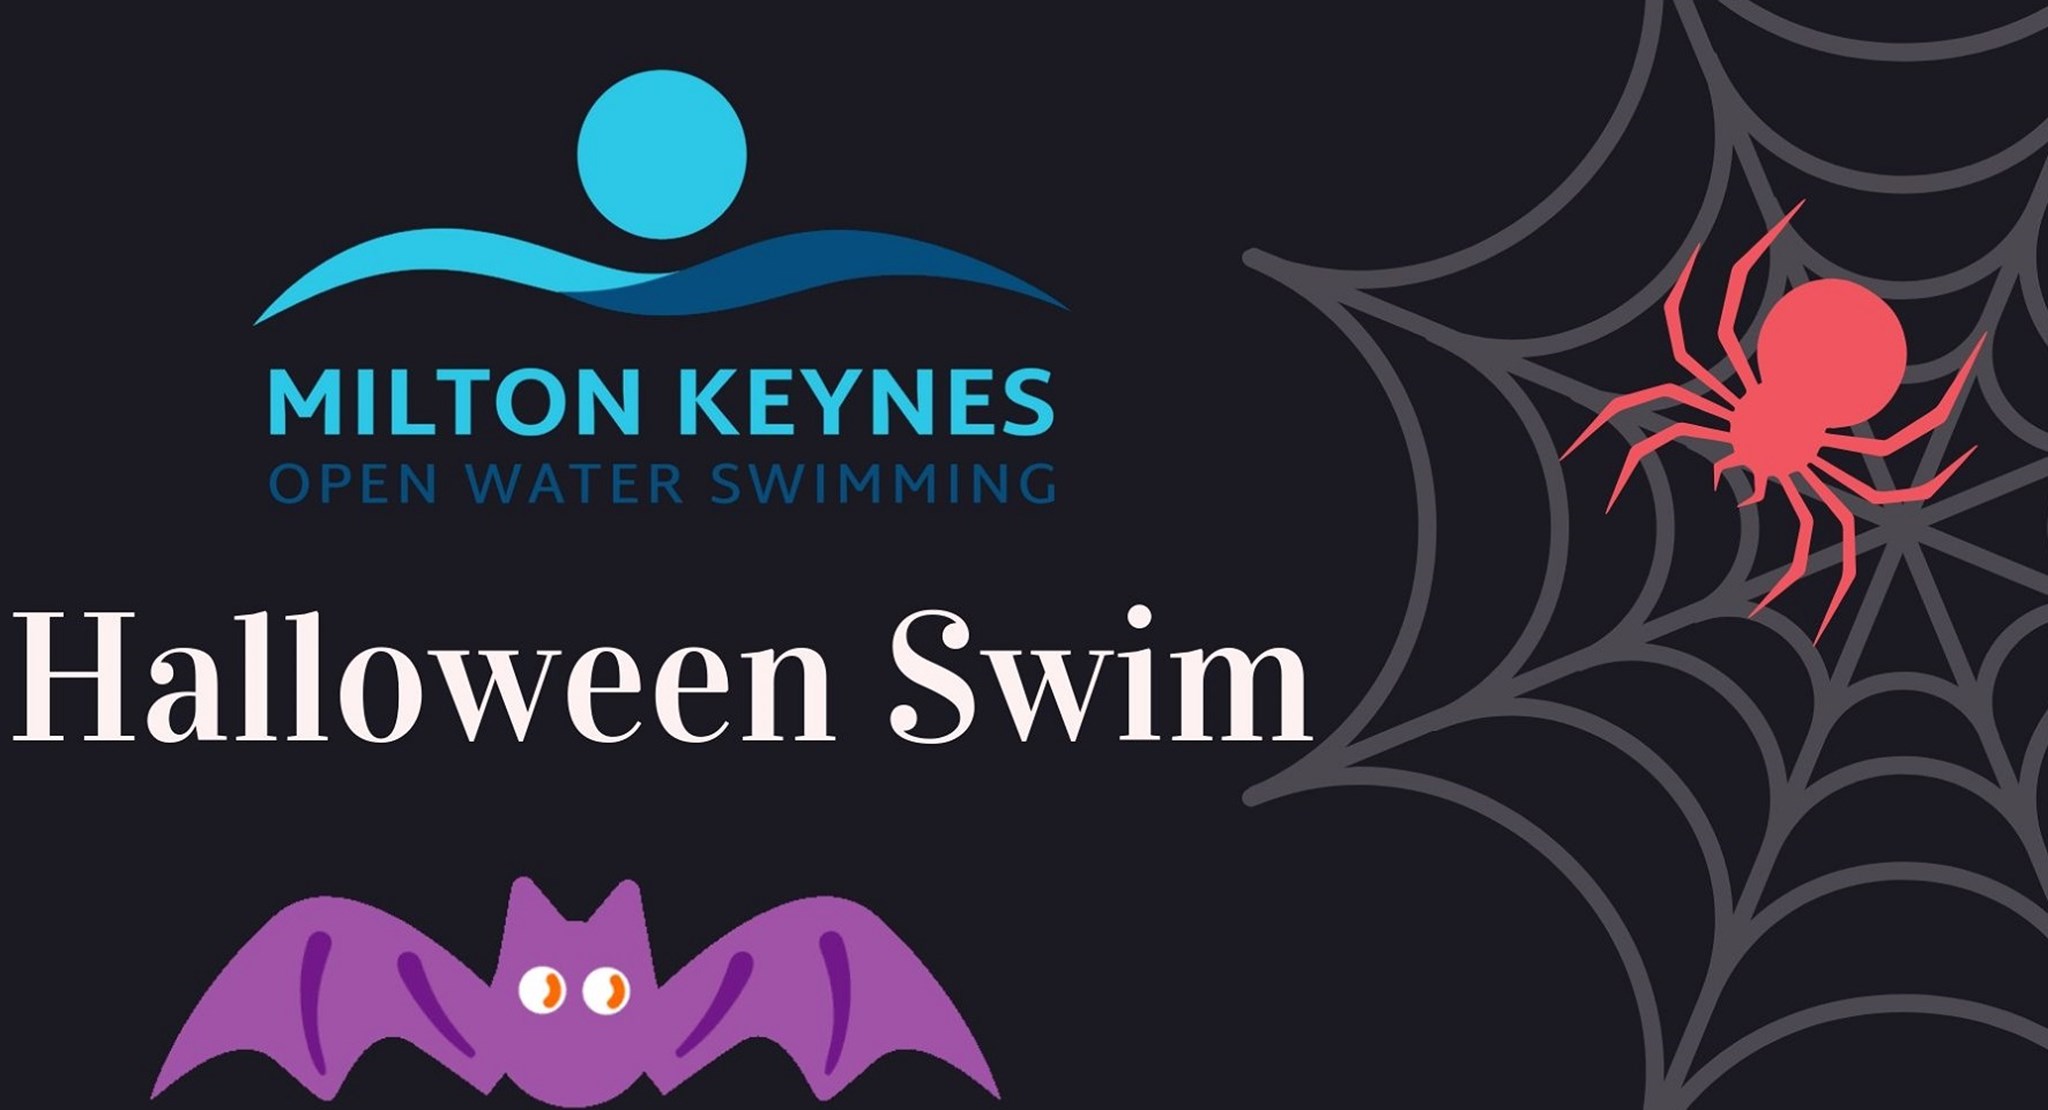 MK Halloween Swim Banner.jpg